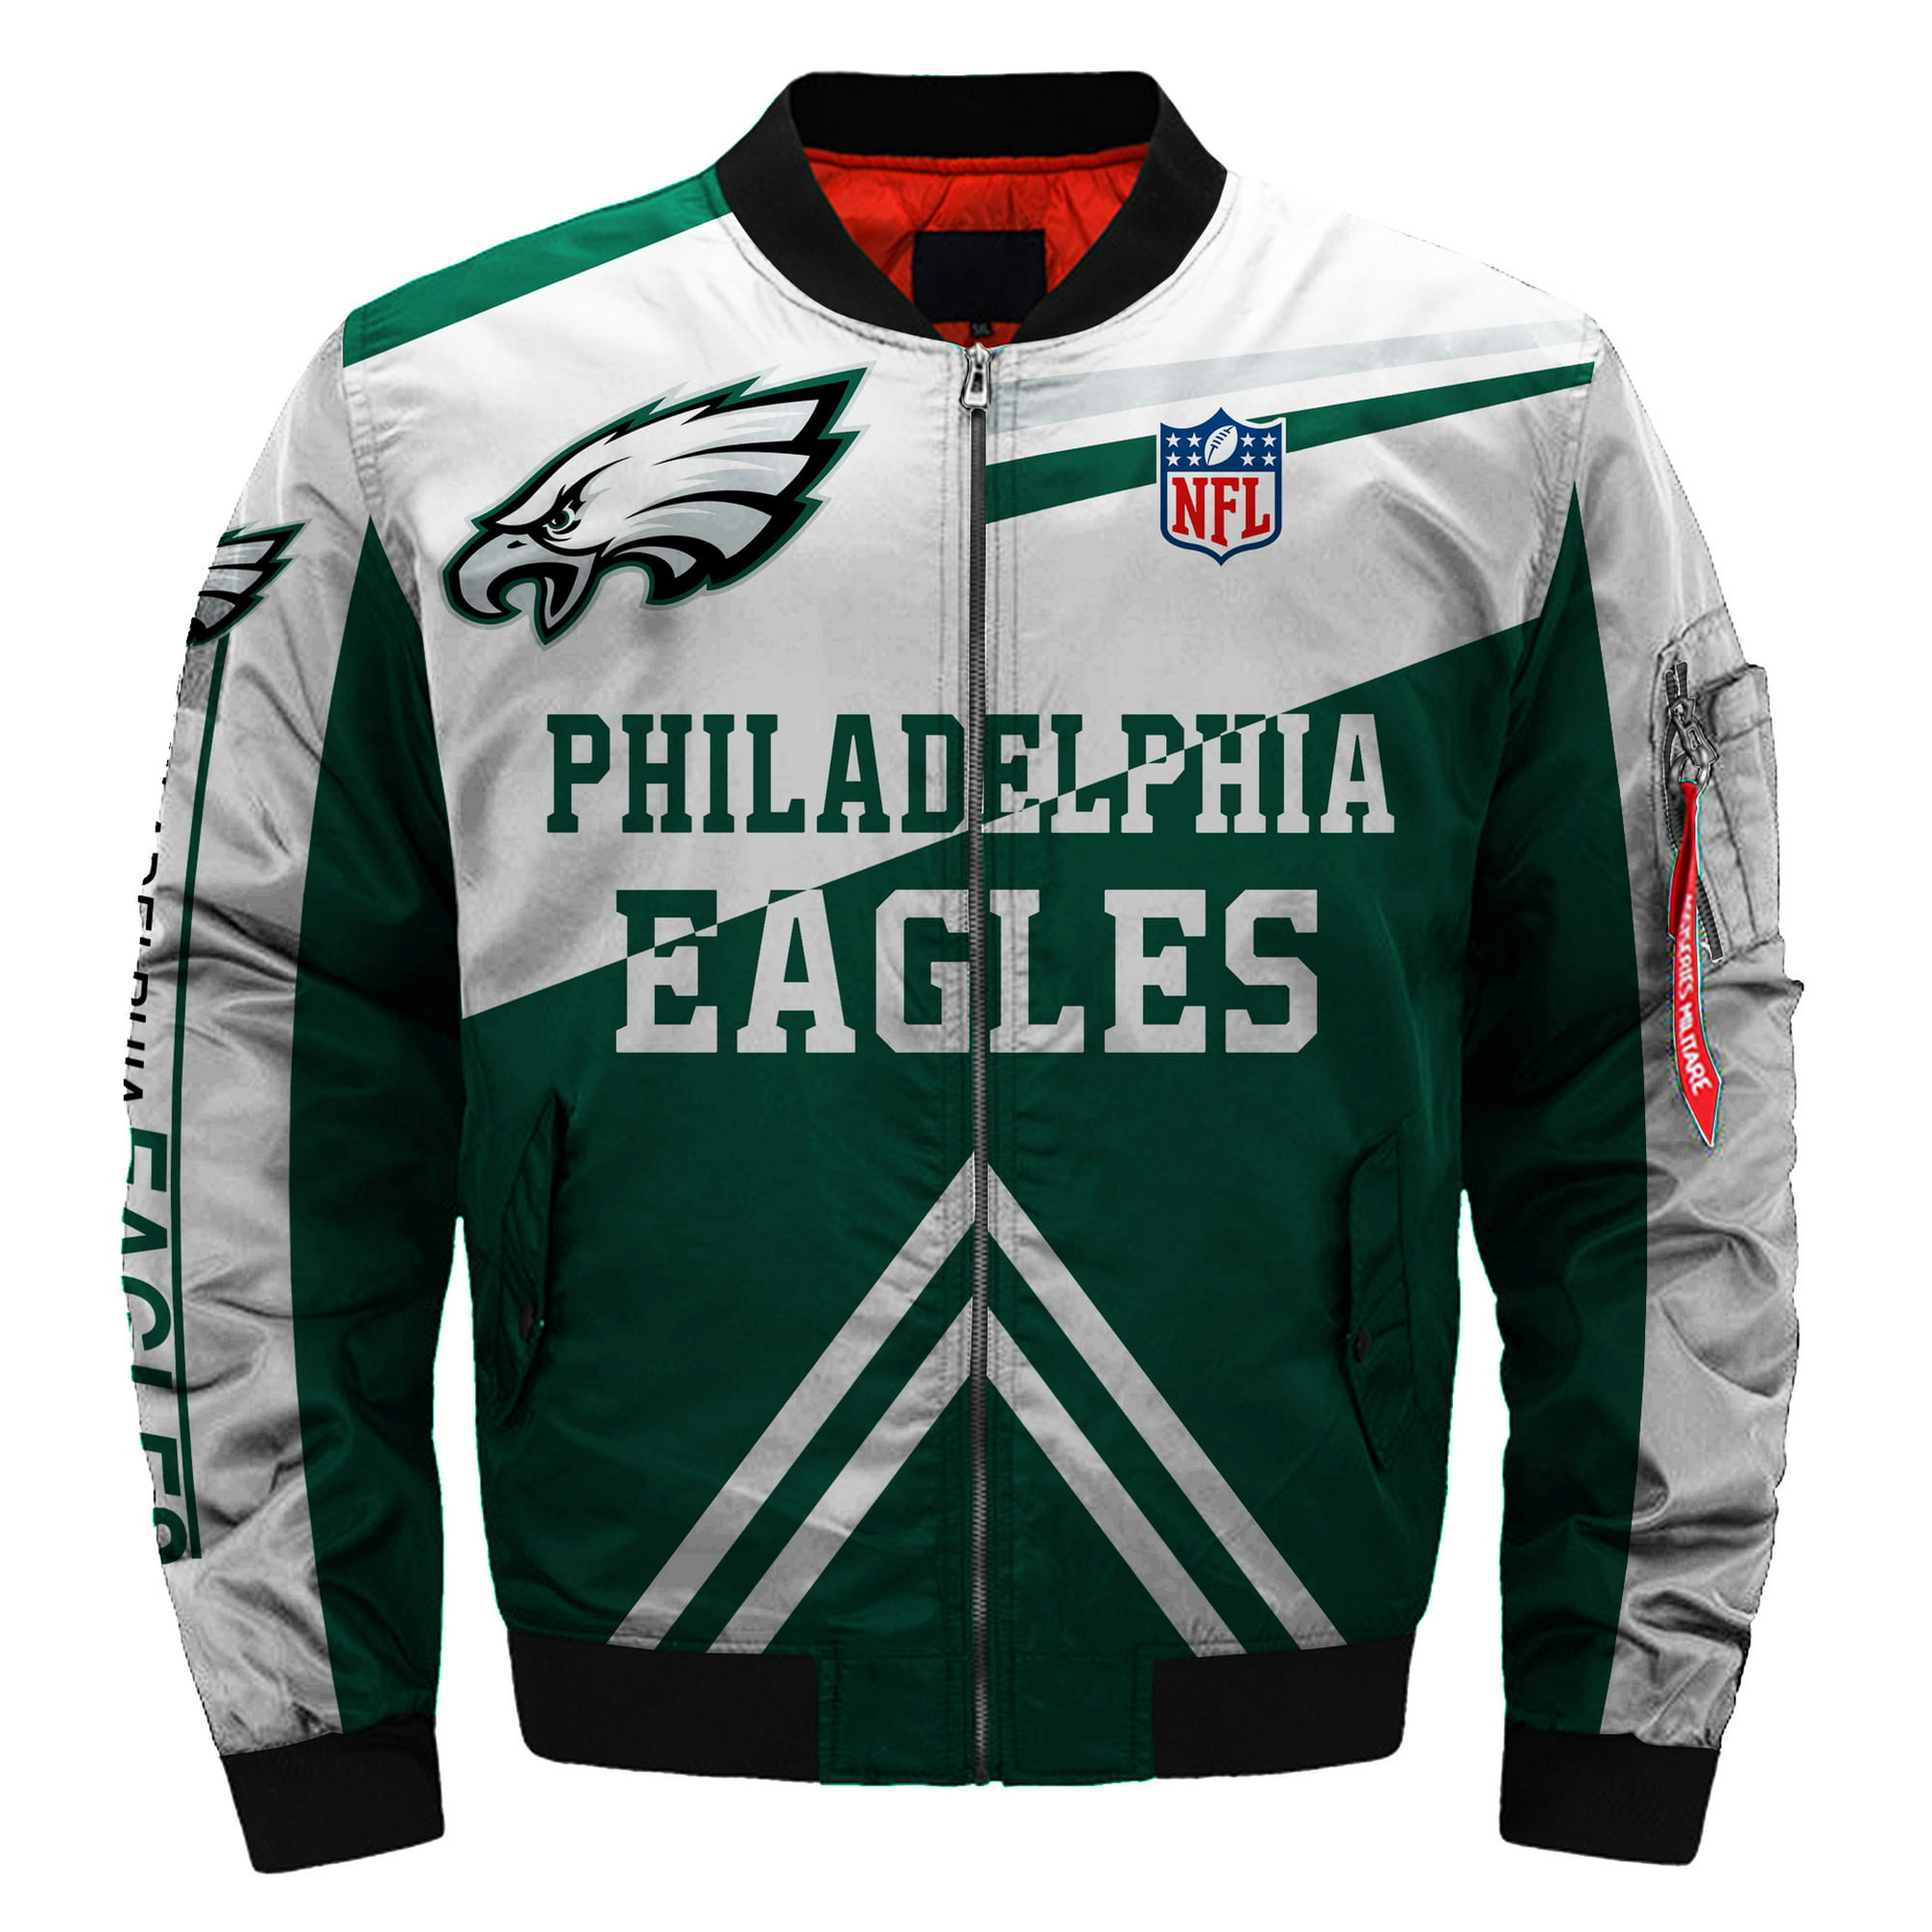 Philadelphia Eagles Jackets